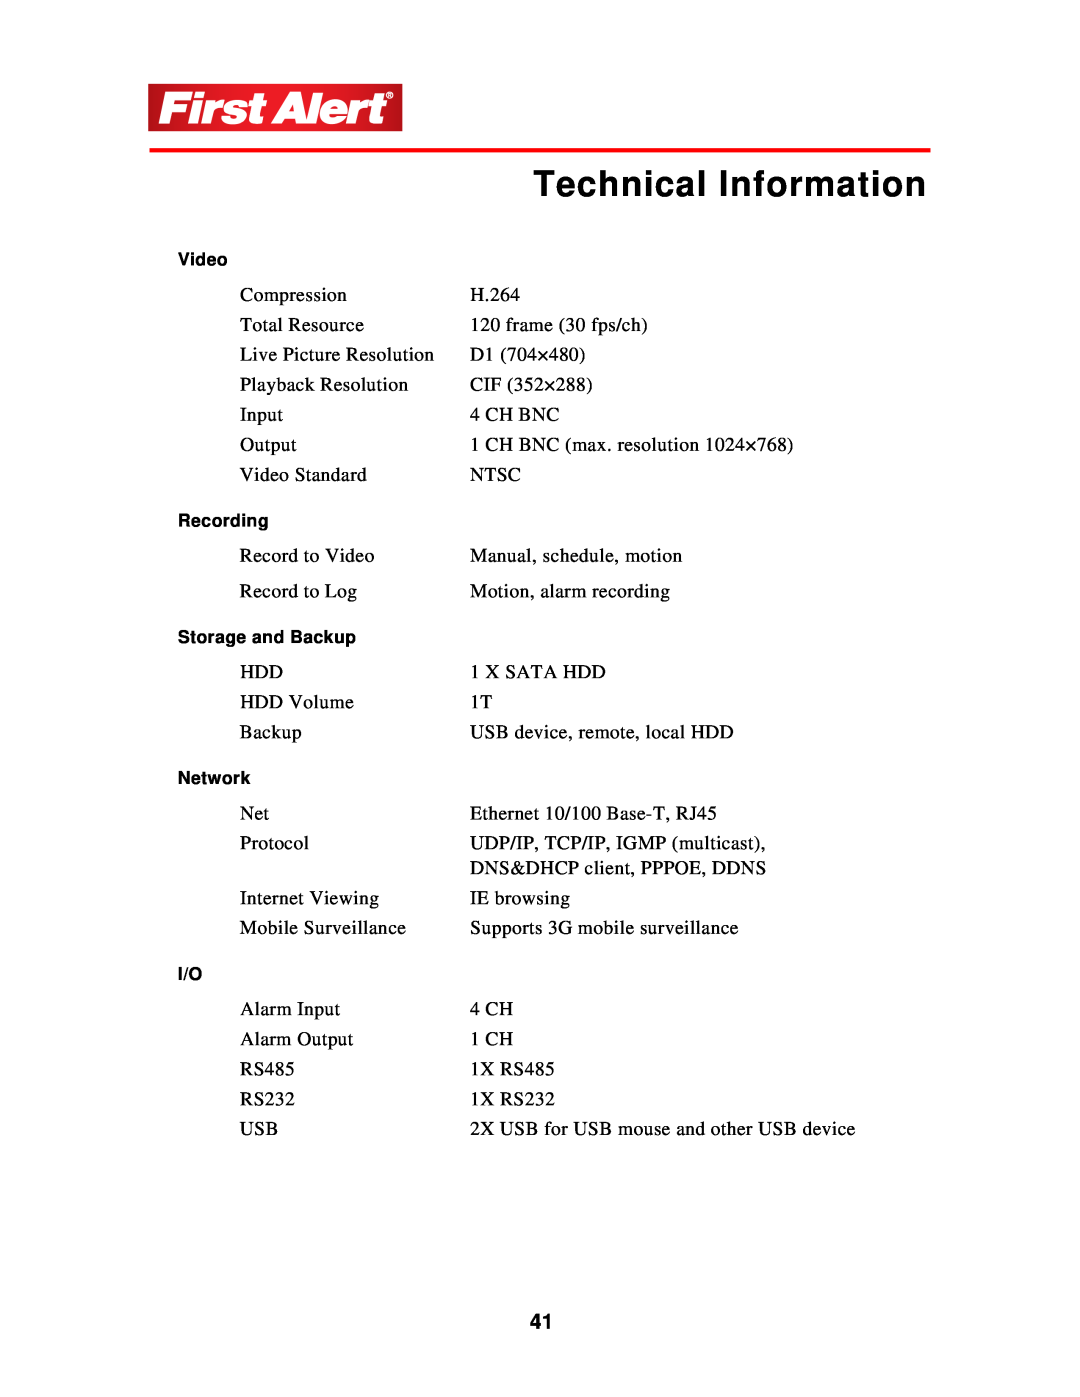 First Alert 1501 user manual Technical Information 